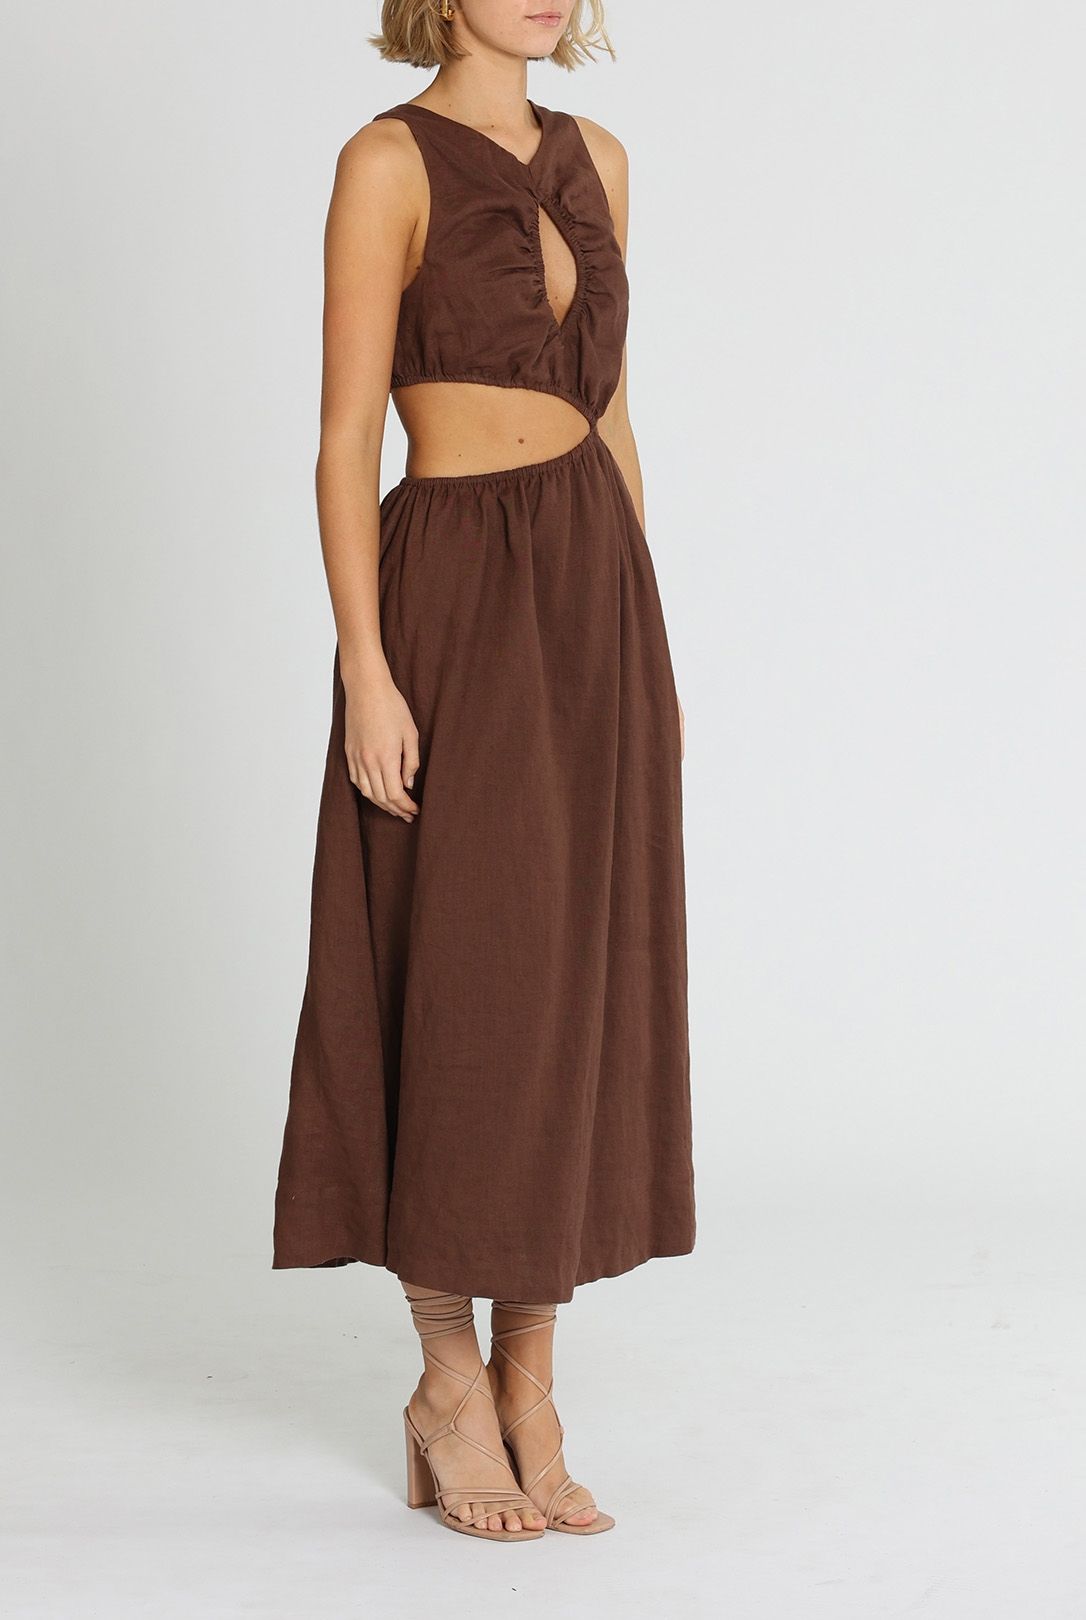 Sovere Mode Midi Dress Brown Cutout